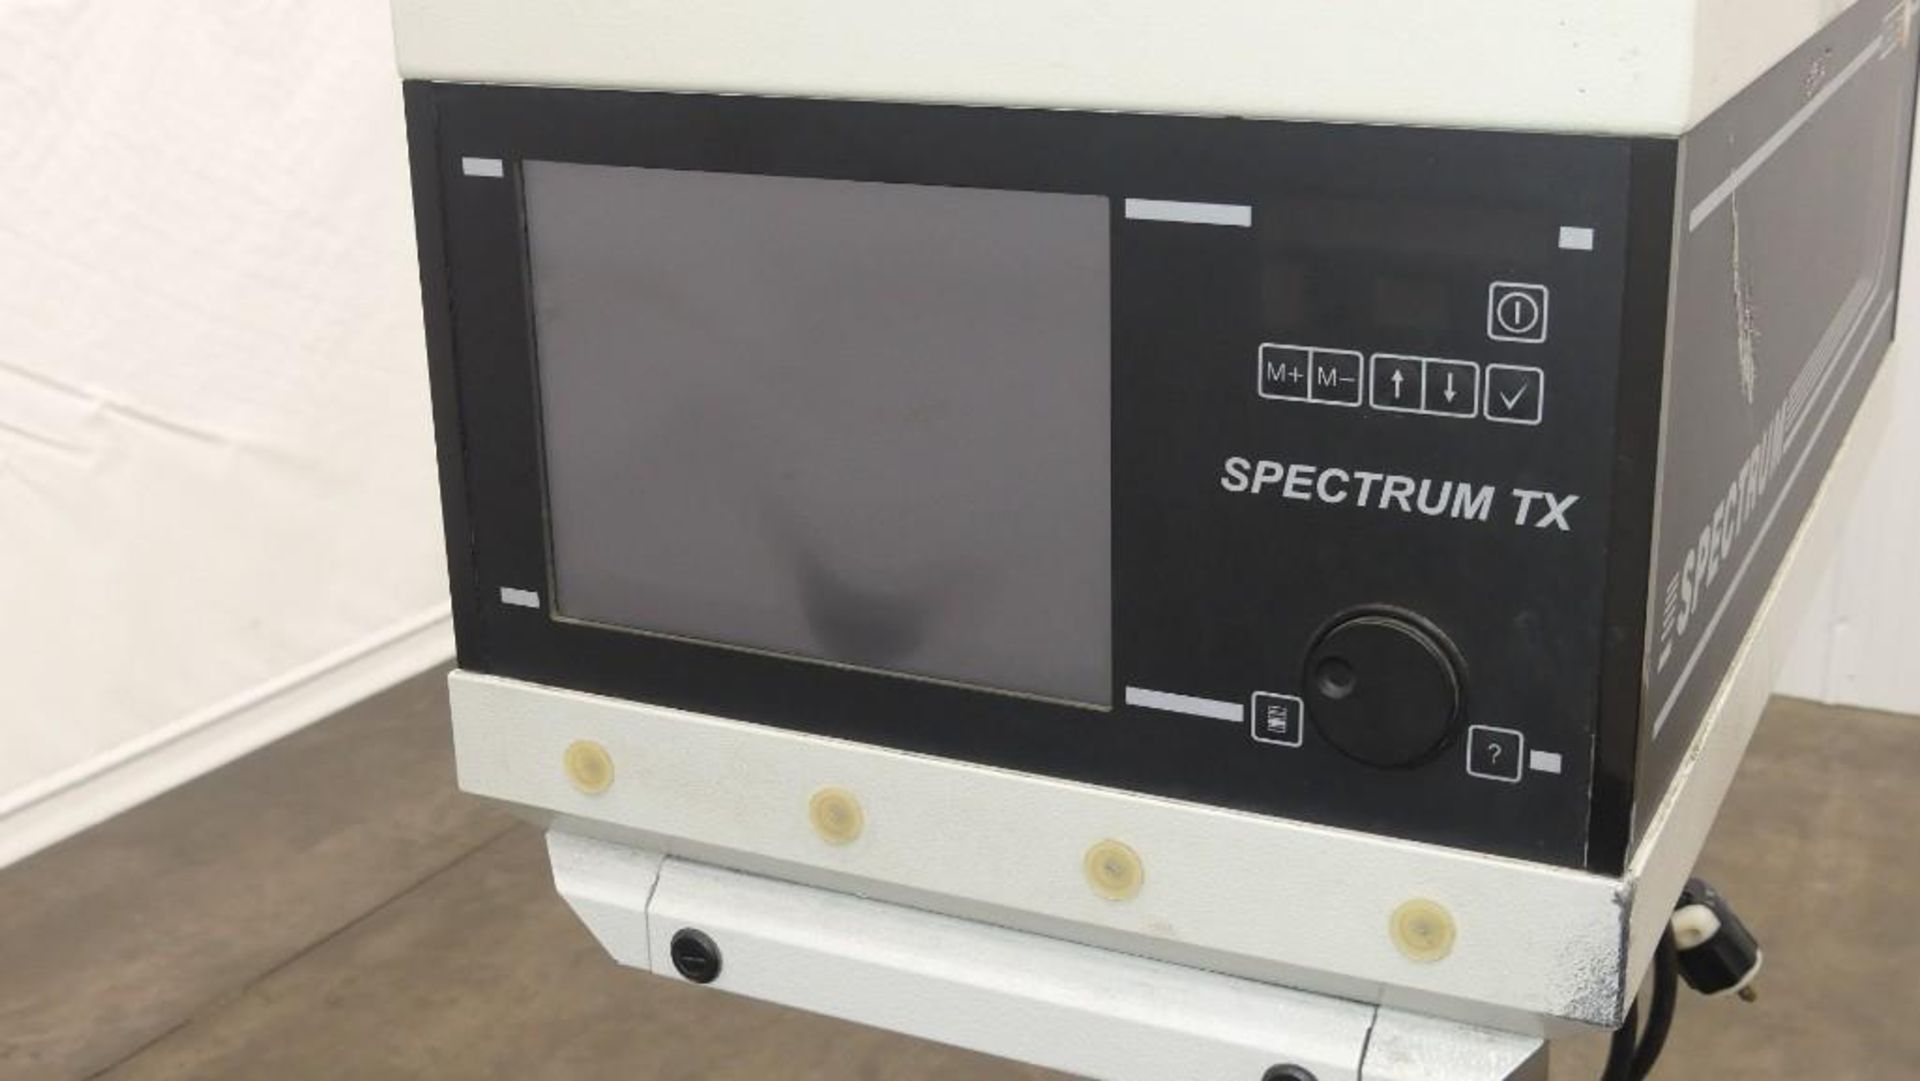 Heuft Spectrum TX Product Inspection - Image 11 of 14